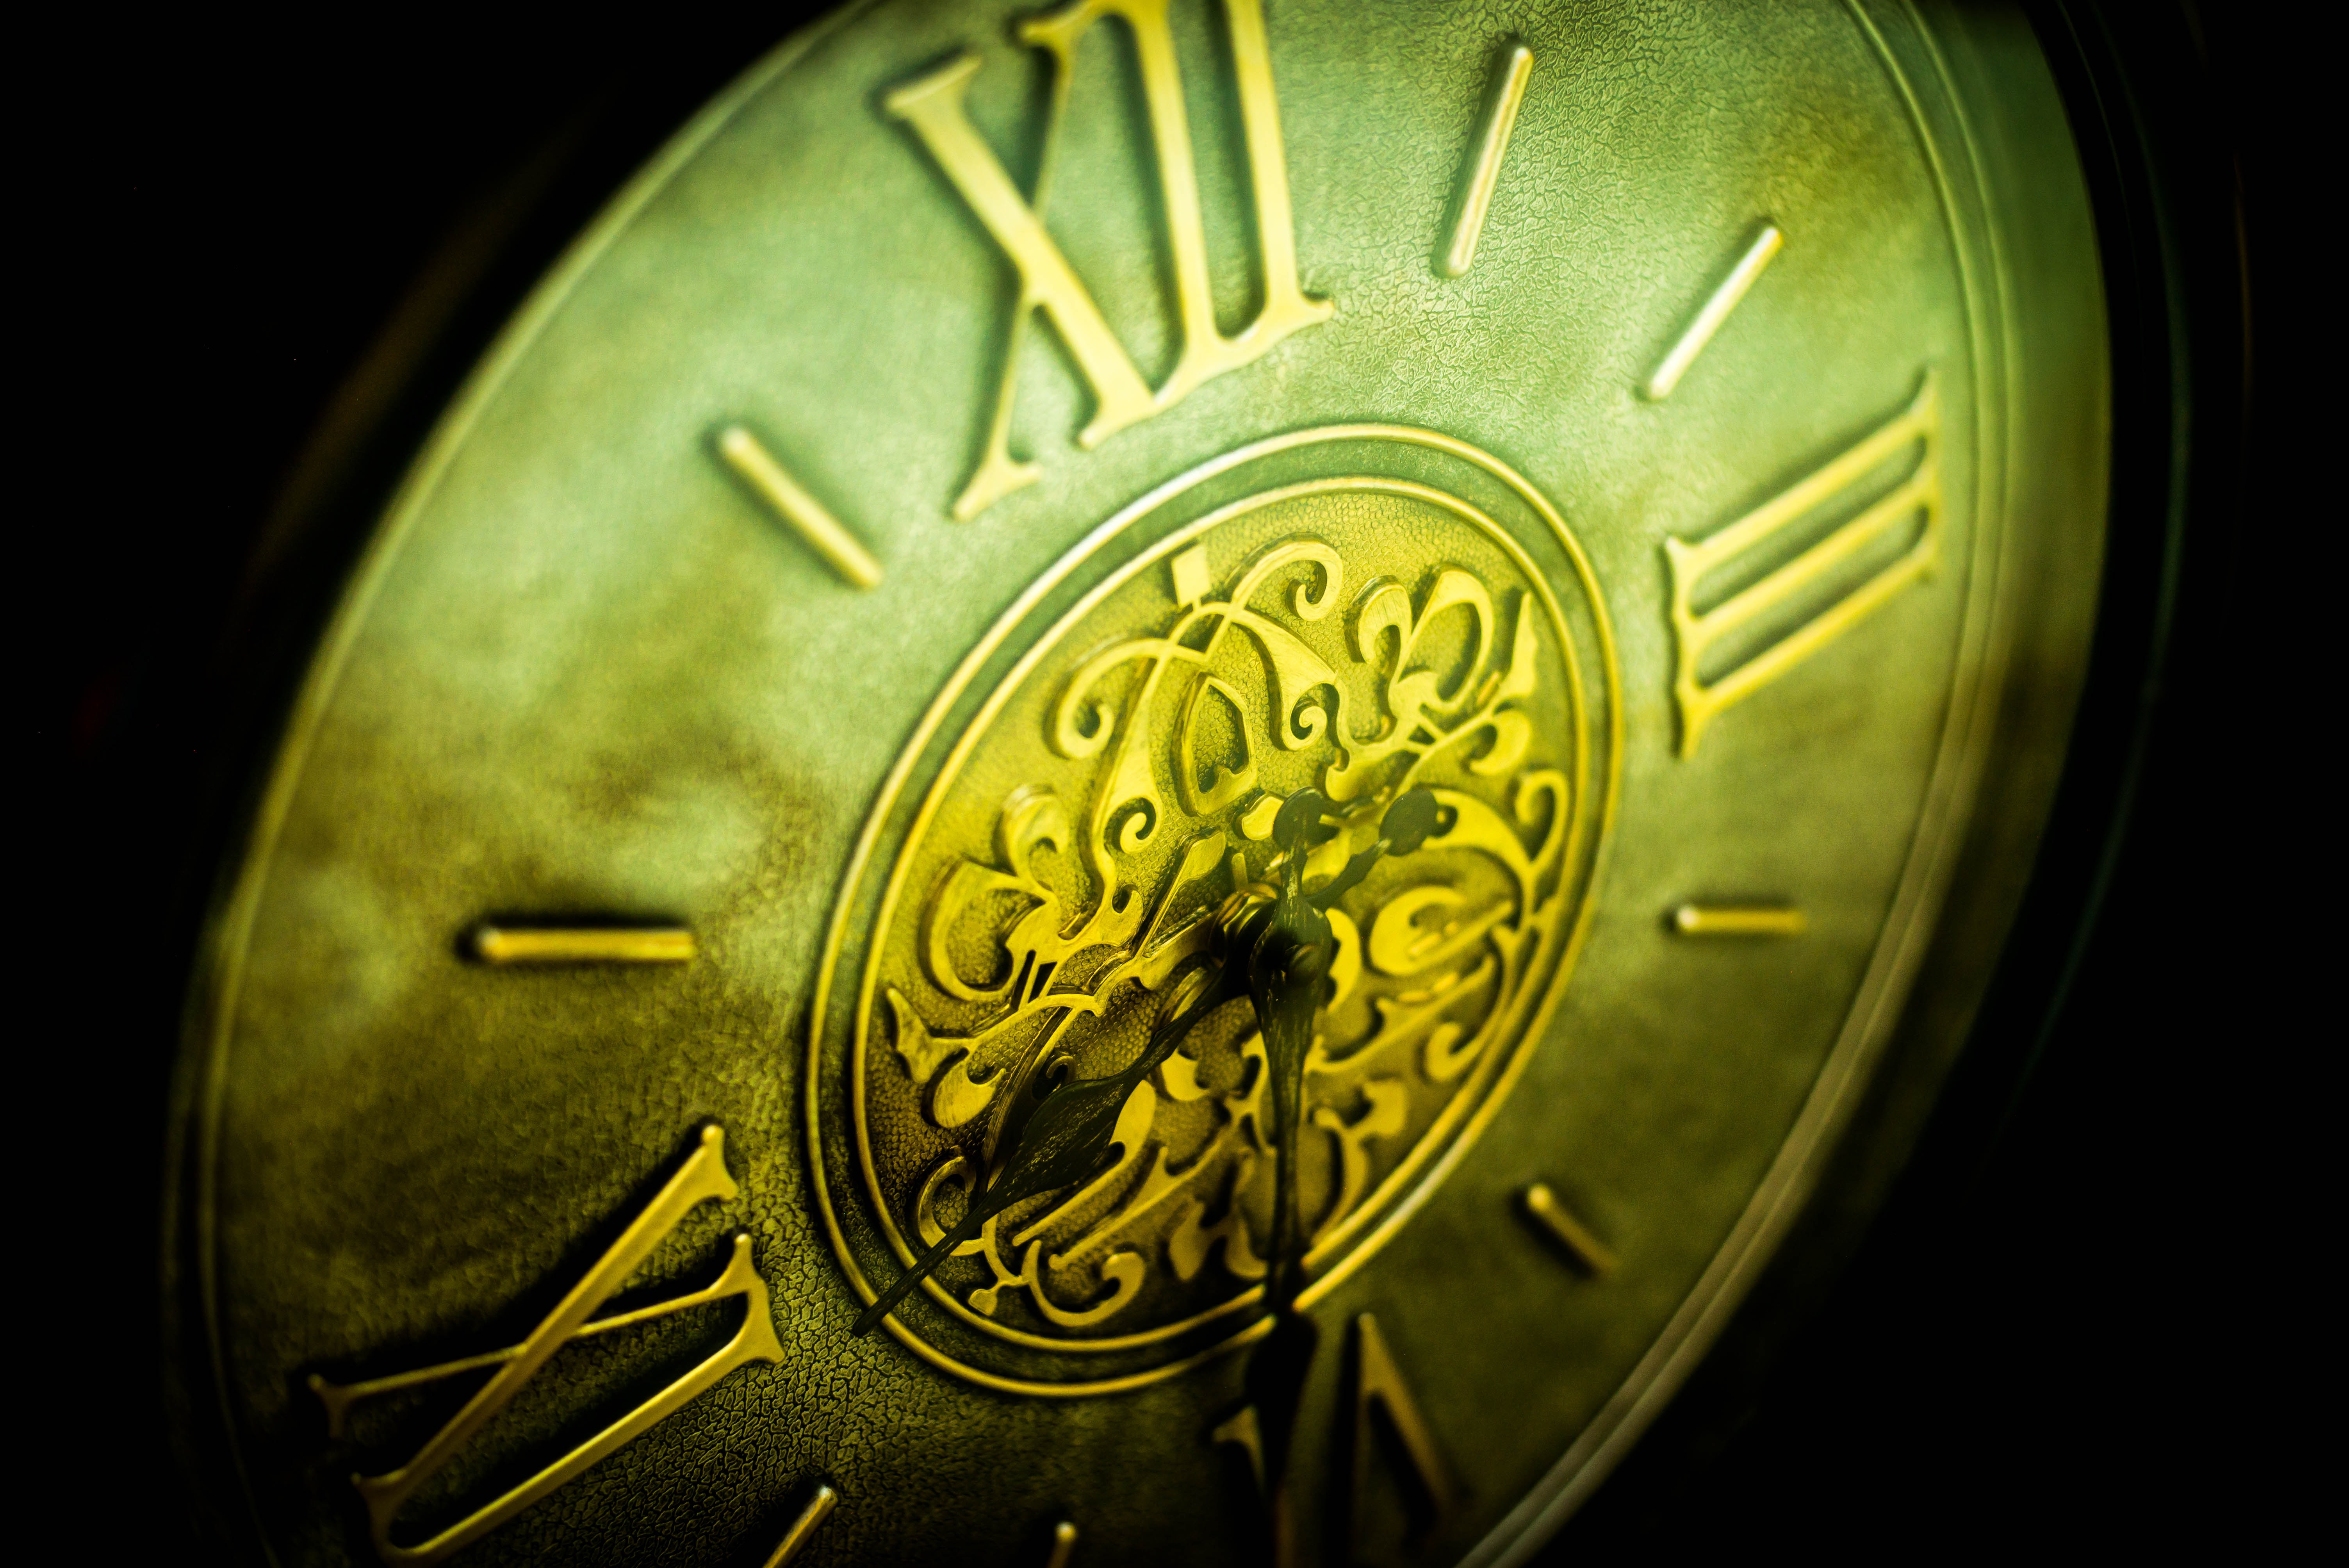 Gray Roman Numeral Clock, Antique, Clock, Clock face, Close-up view, HQ Photo